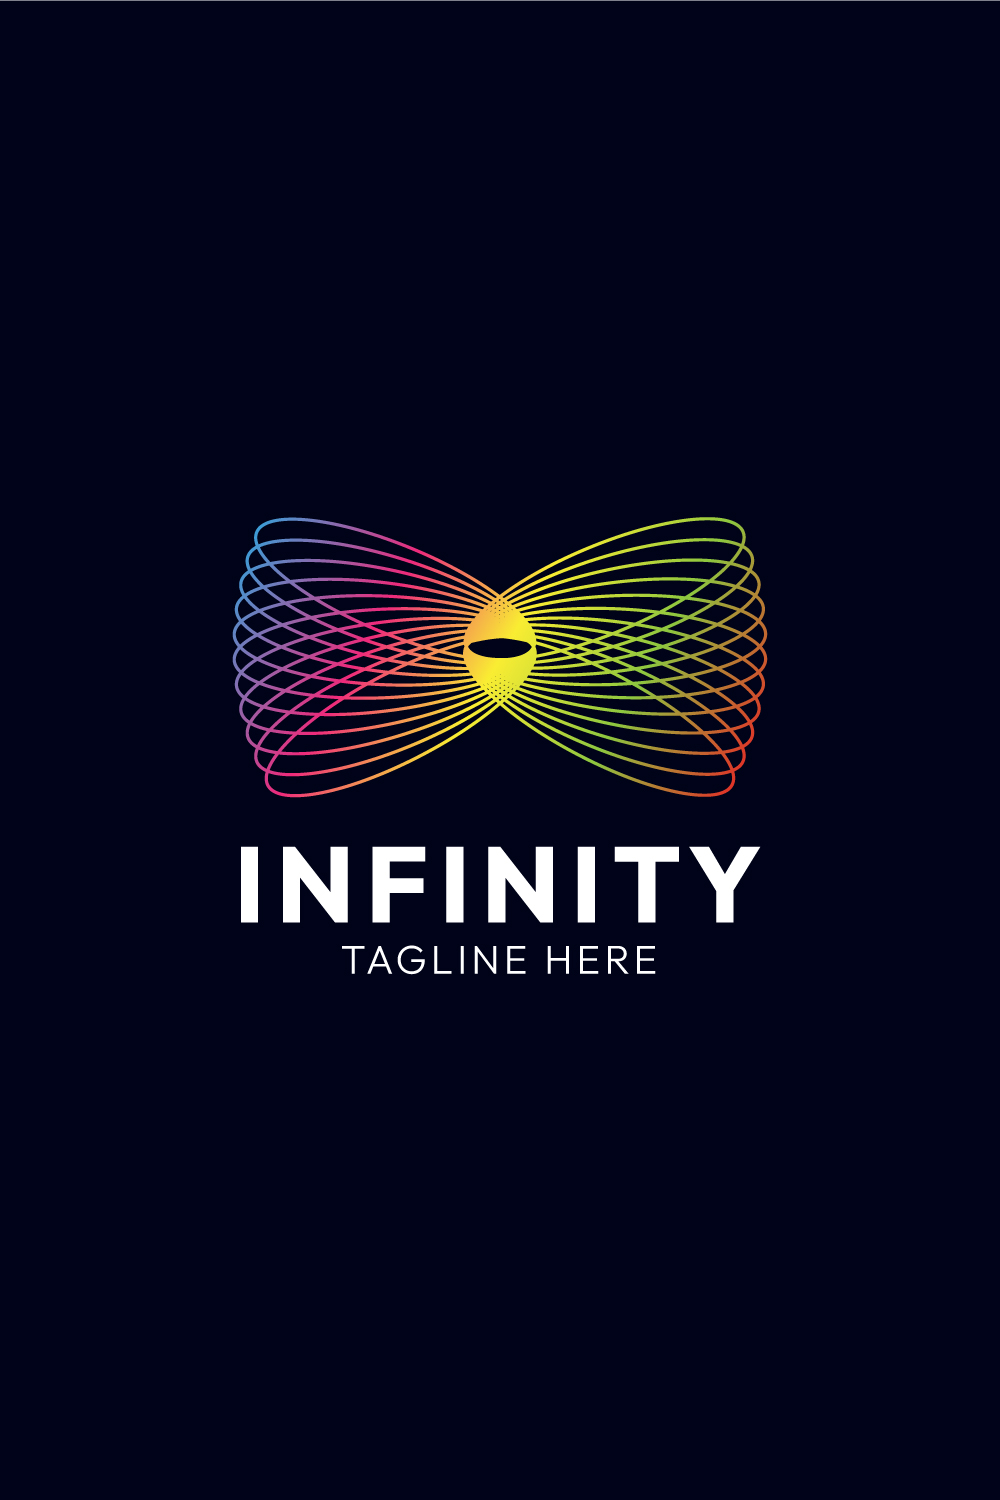 Elegant Infinity Line Art Logo Design: Timeless Symbolism for Your Brand pinterest preview image.